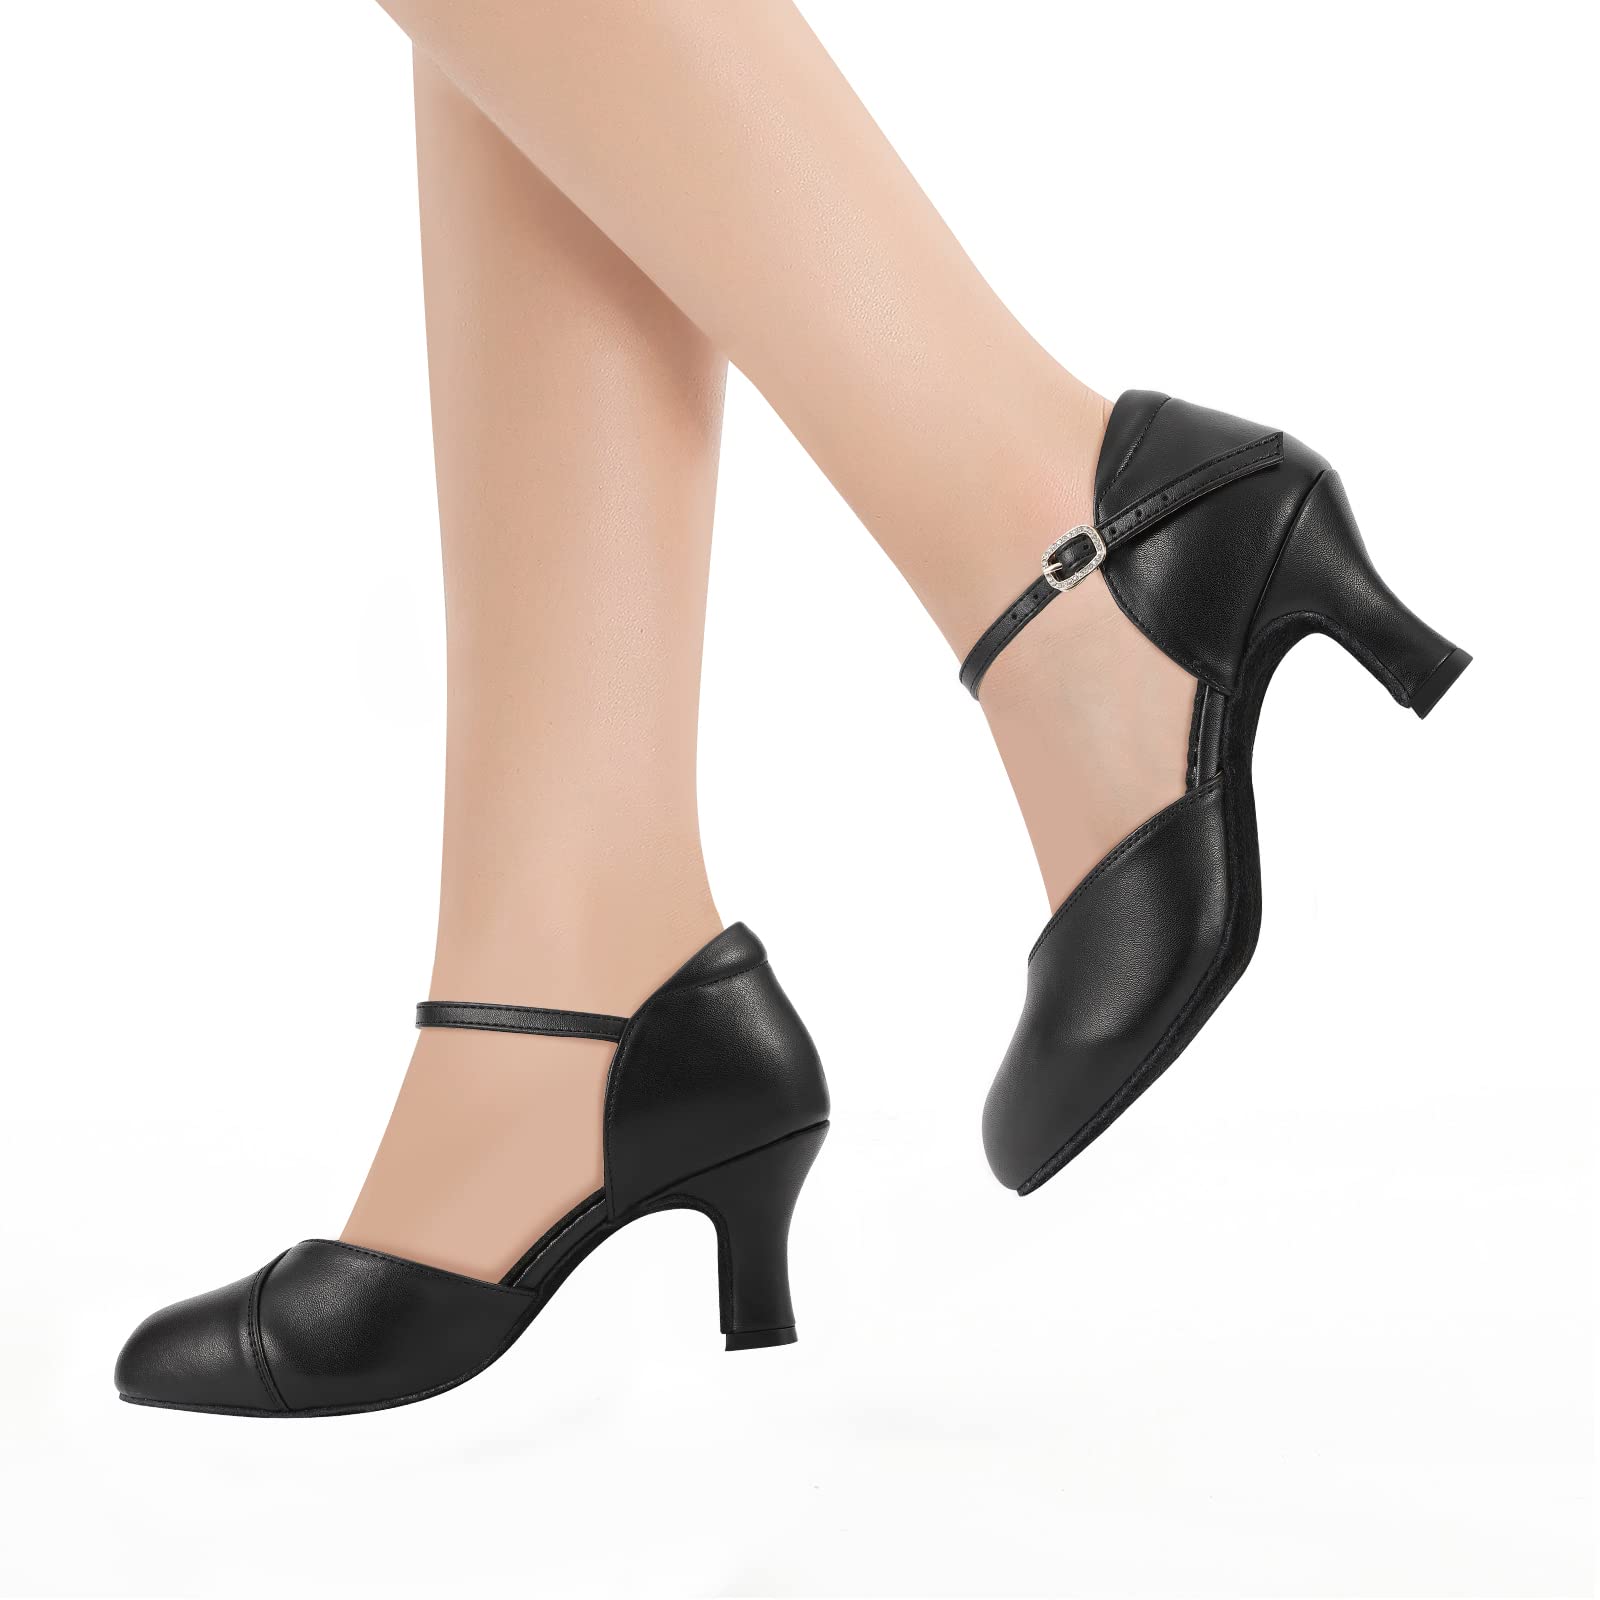 Women's Ballroom Salsa Latin Dance Pumps Wedding Ankle Strap Heels Character Shoes, Black 7.5 M US